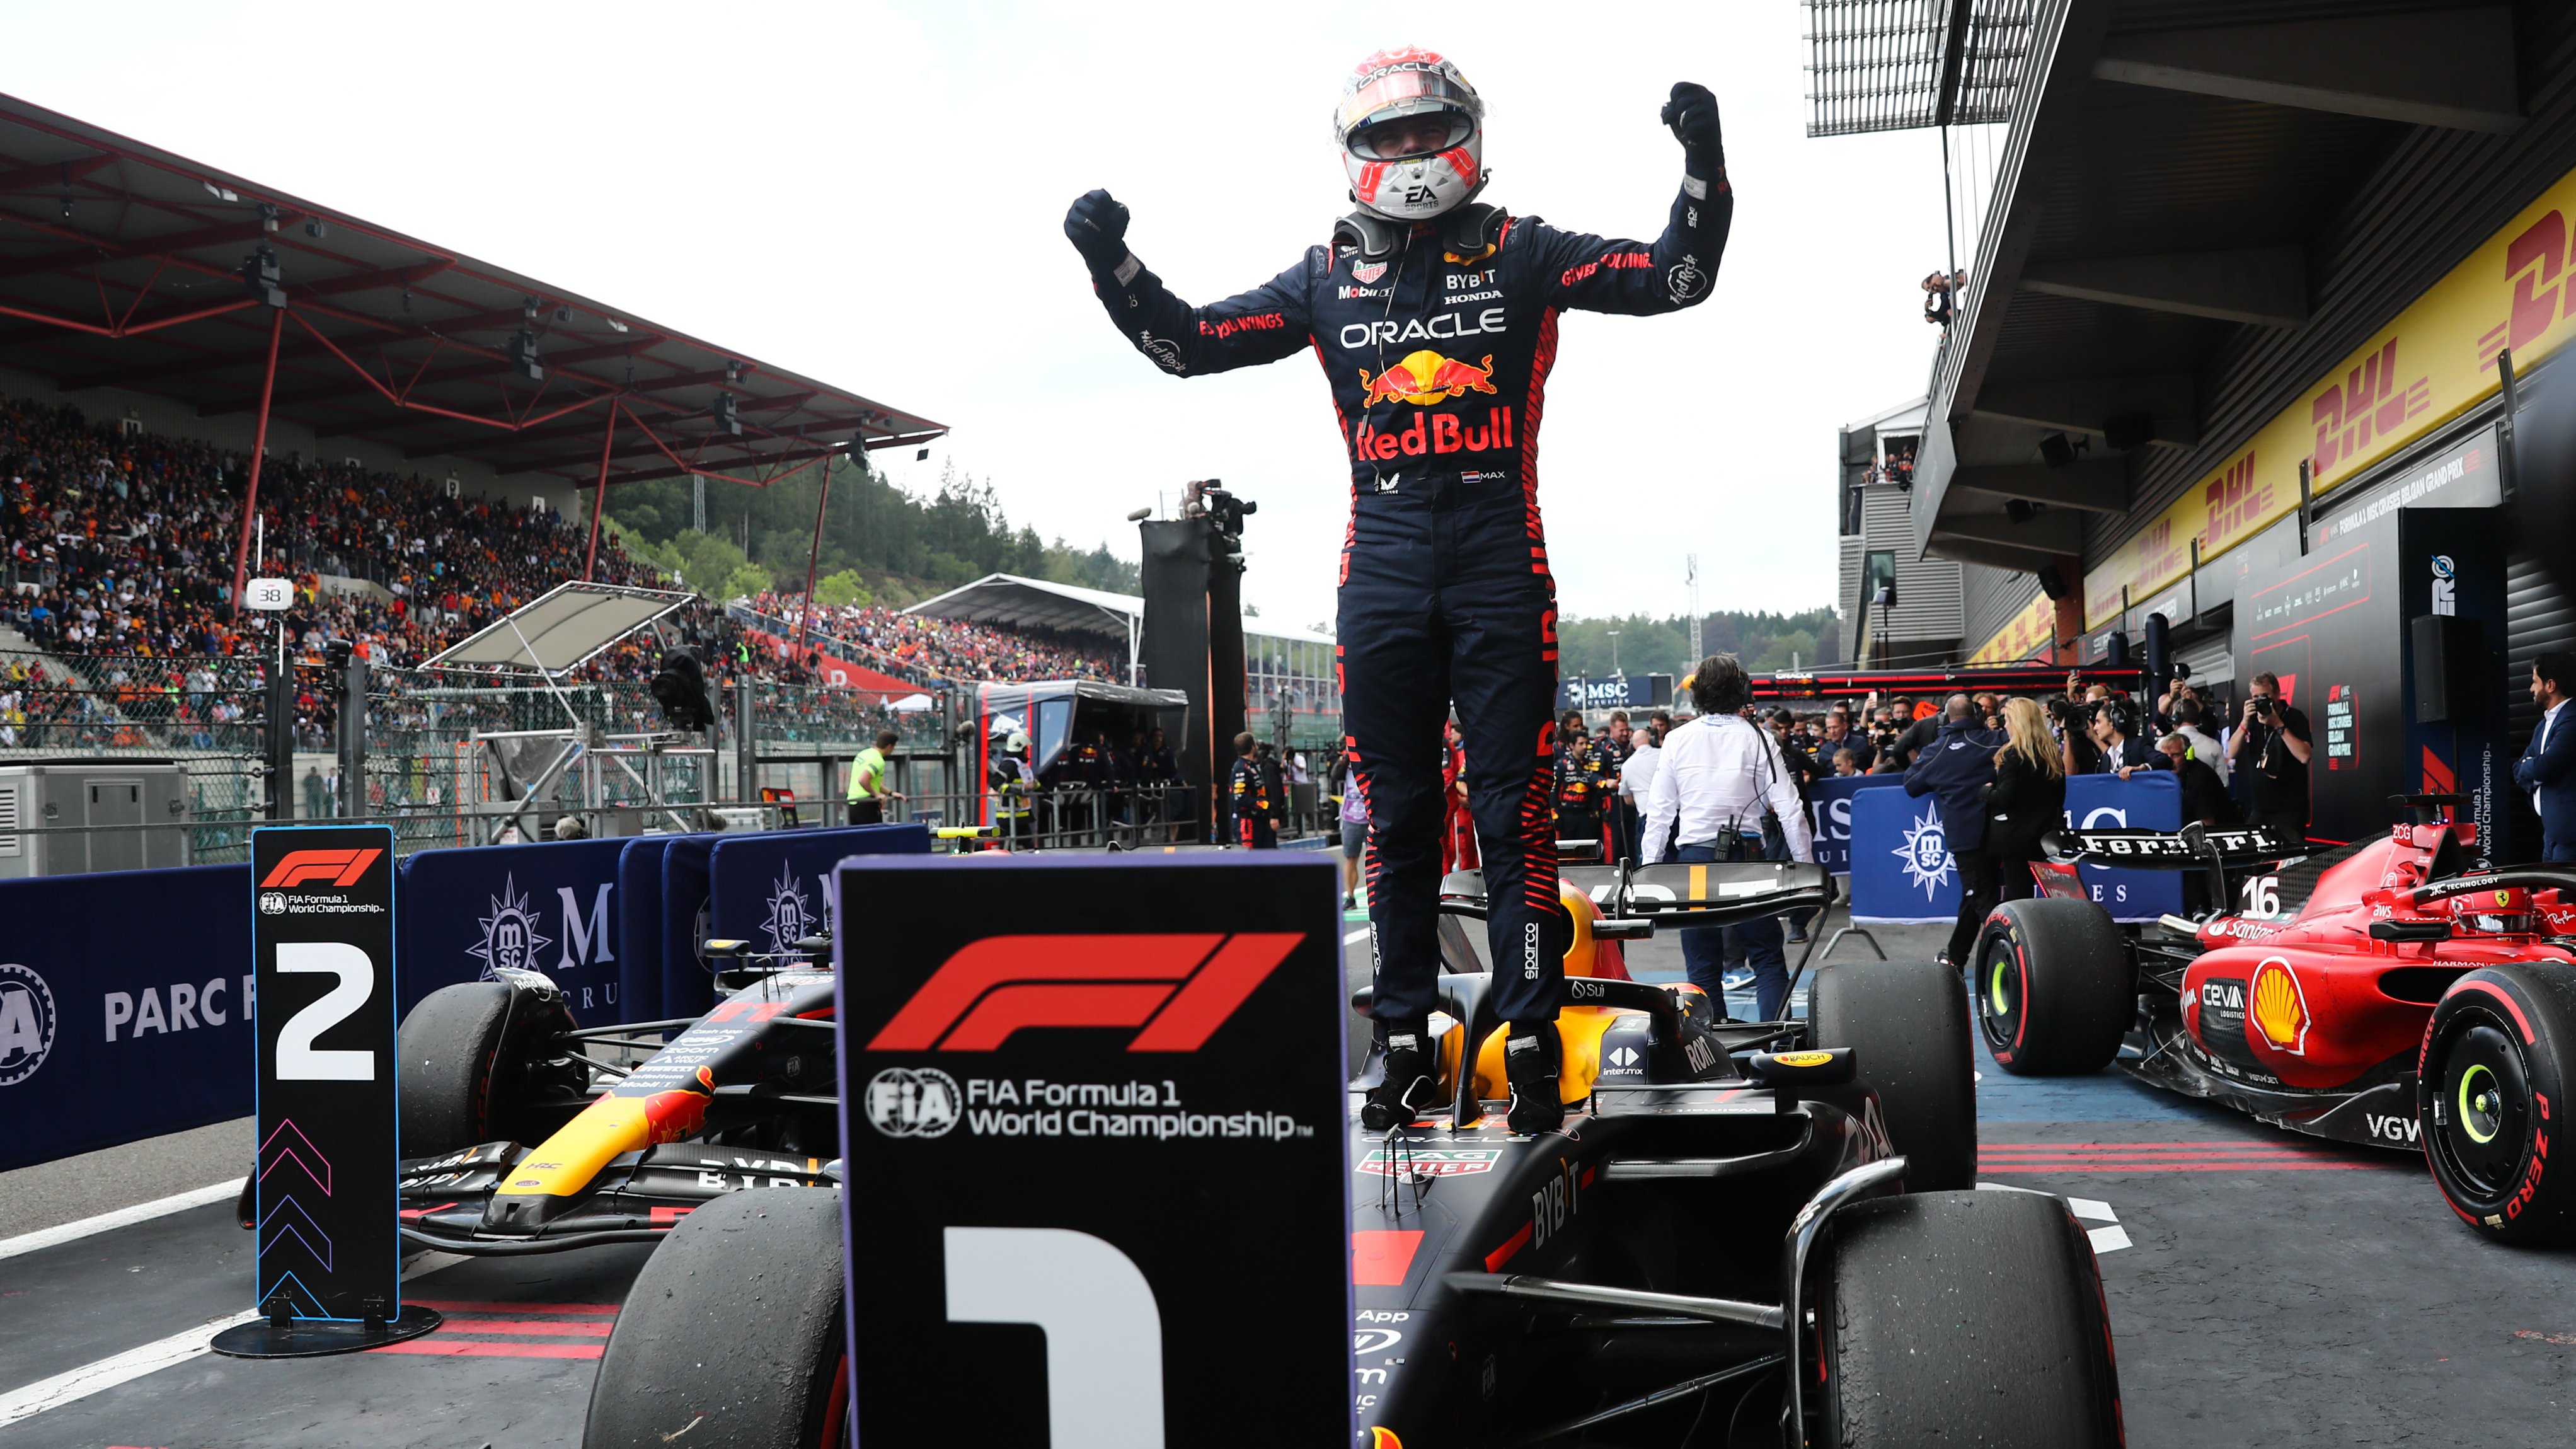 Max Verstappen wins his third Formula 1 world championship